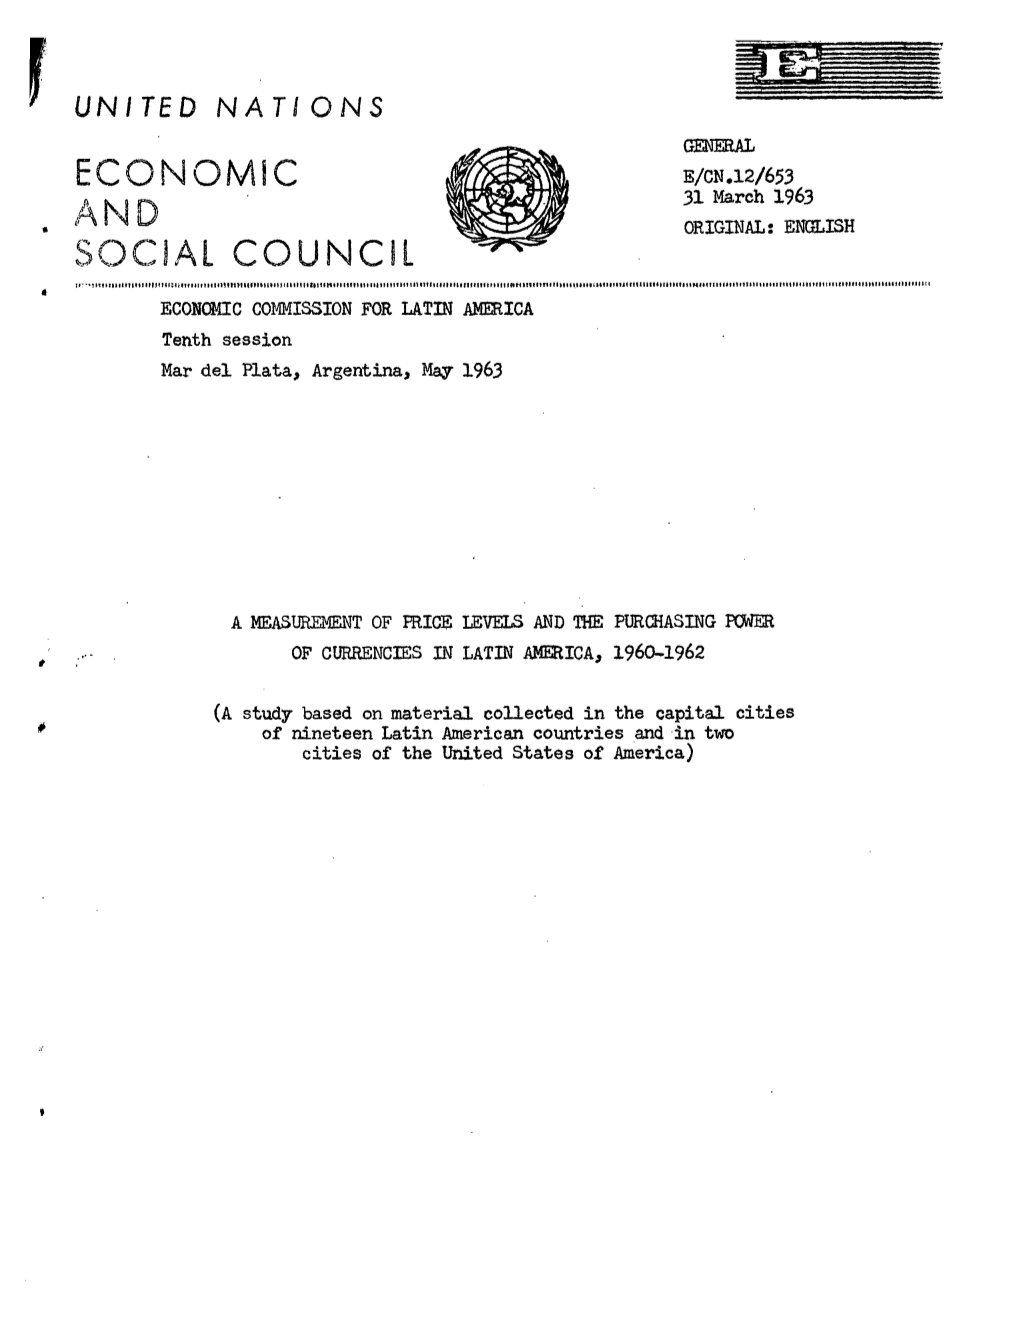 UNITED NATI ONS Gmeral E/CN,12/653 a 31 March 1963 ORIGINAL: ENGLISH